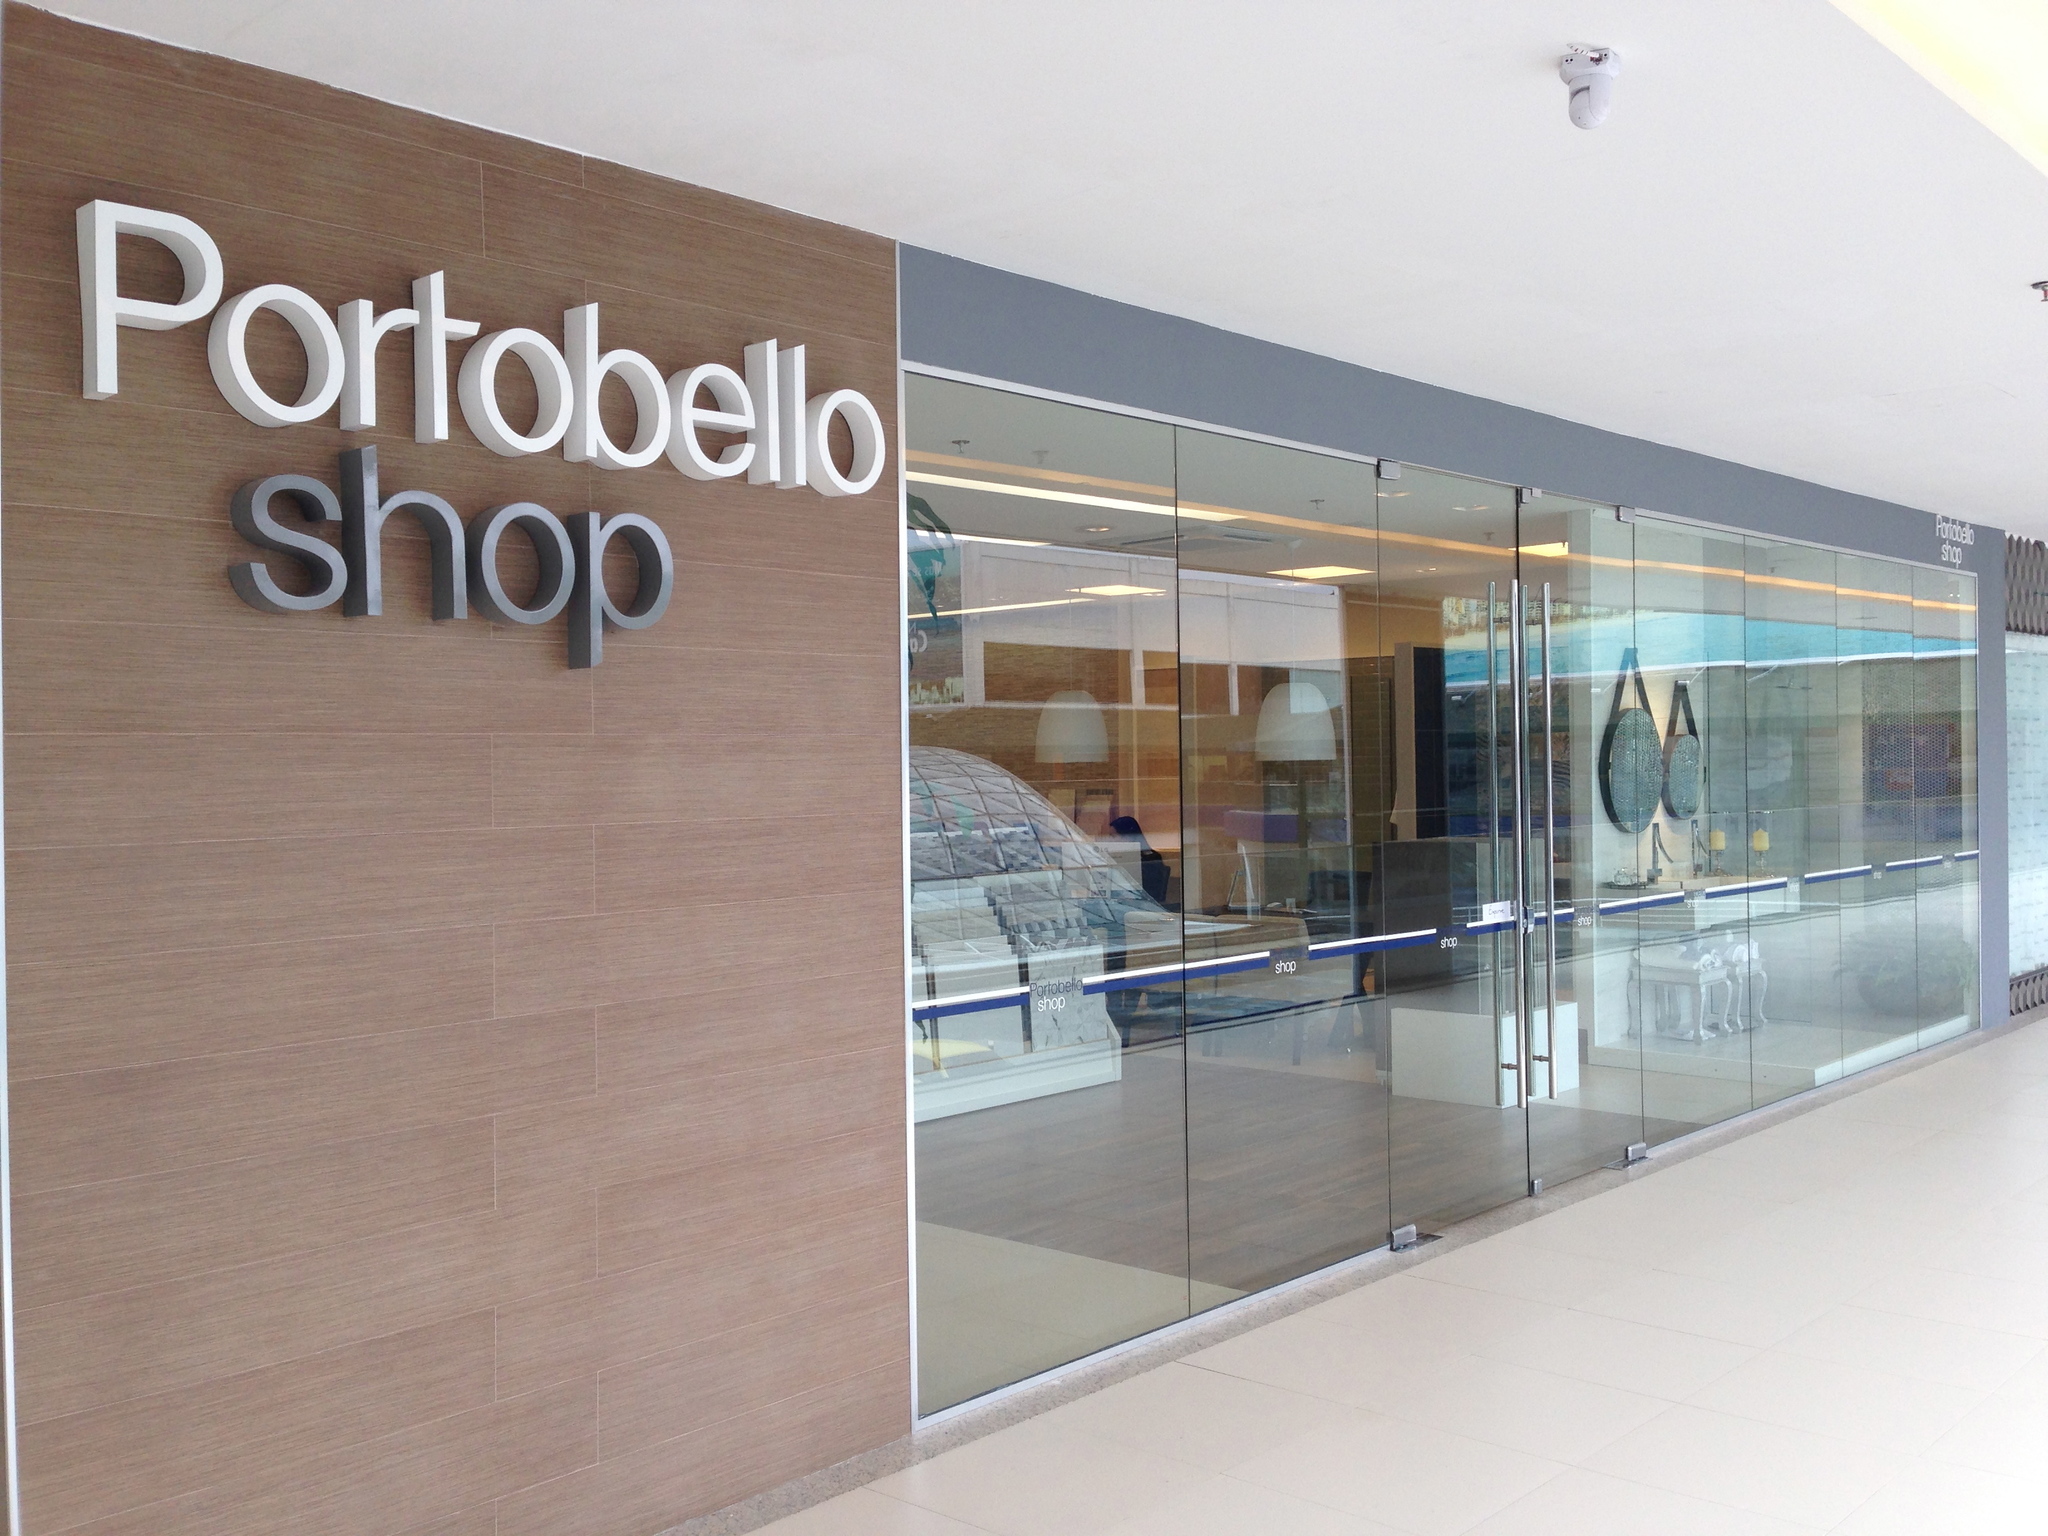 Portobello Shop reinaugura loja em Maceió